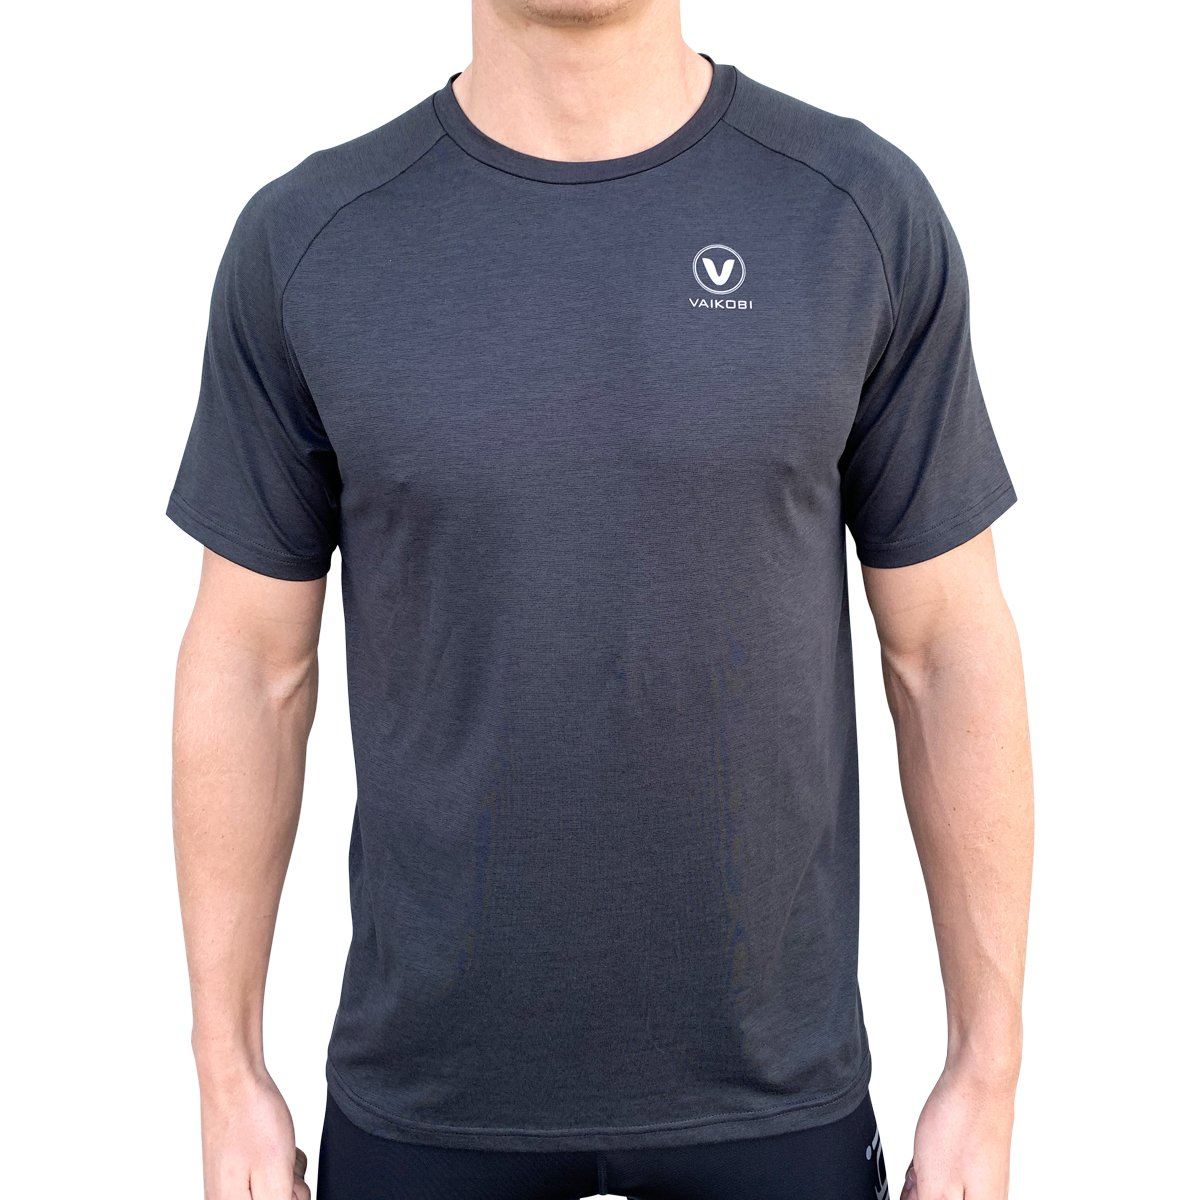 Vaikobi UV Performance Tech T-Shirt, Men's